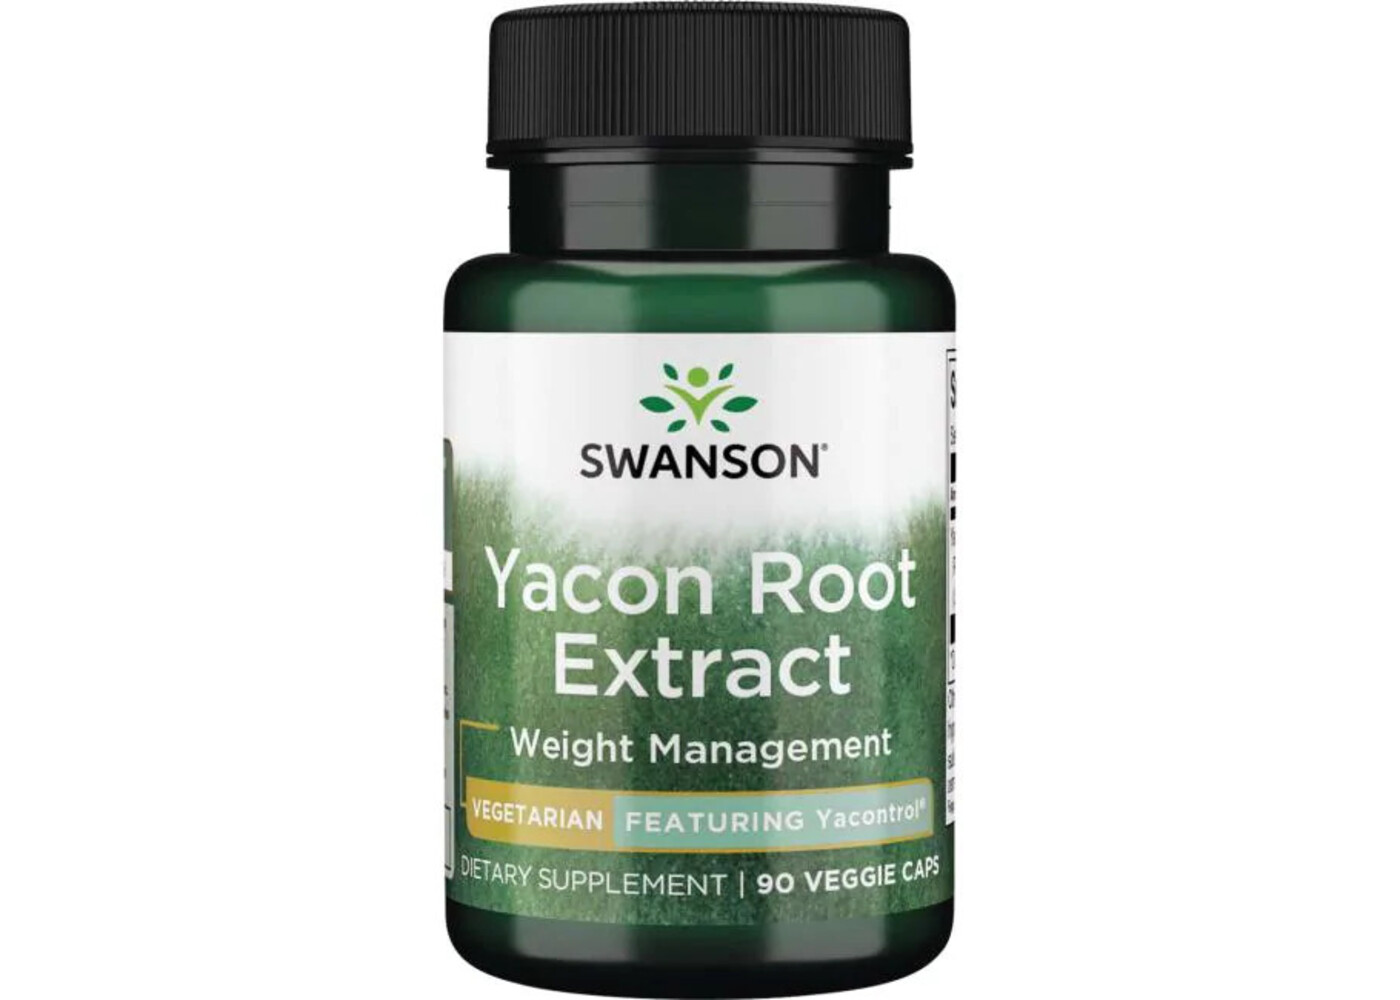 Swanson Yacontrol Yacon Root Extract 4:1, 100 mg 90 Veg Caps